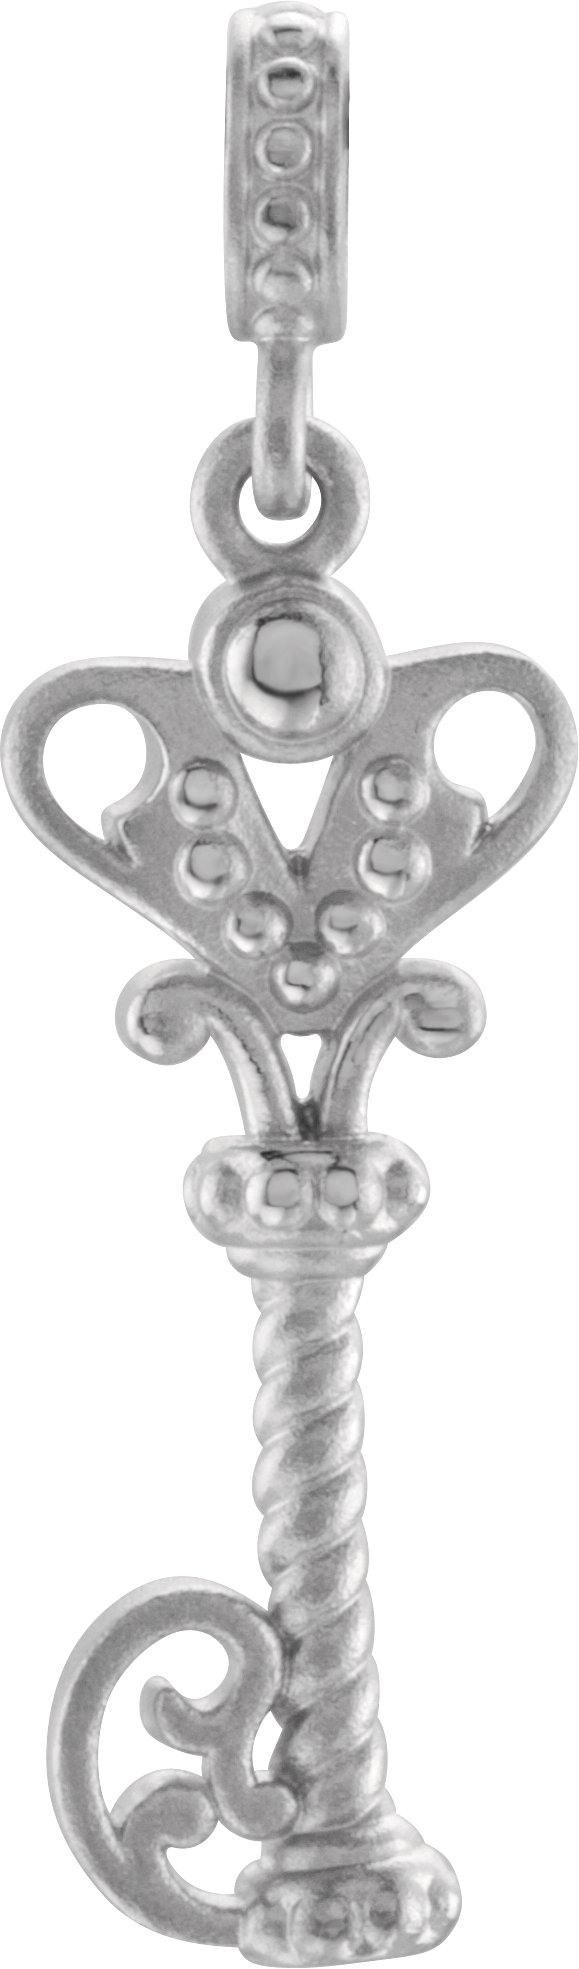 Sterling Silver Vintage Style Key Pendant Ref. 3393746